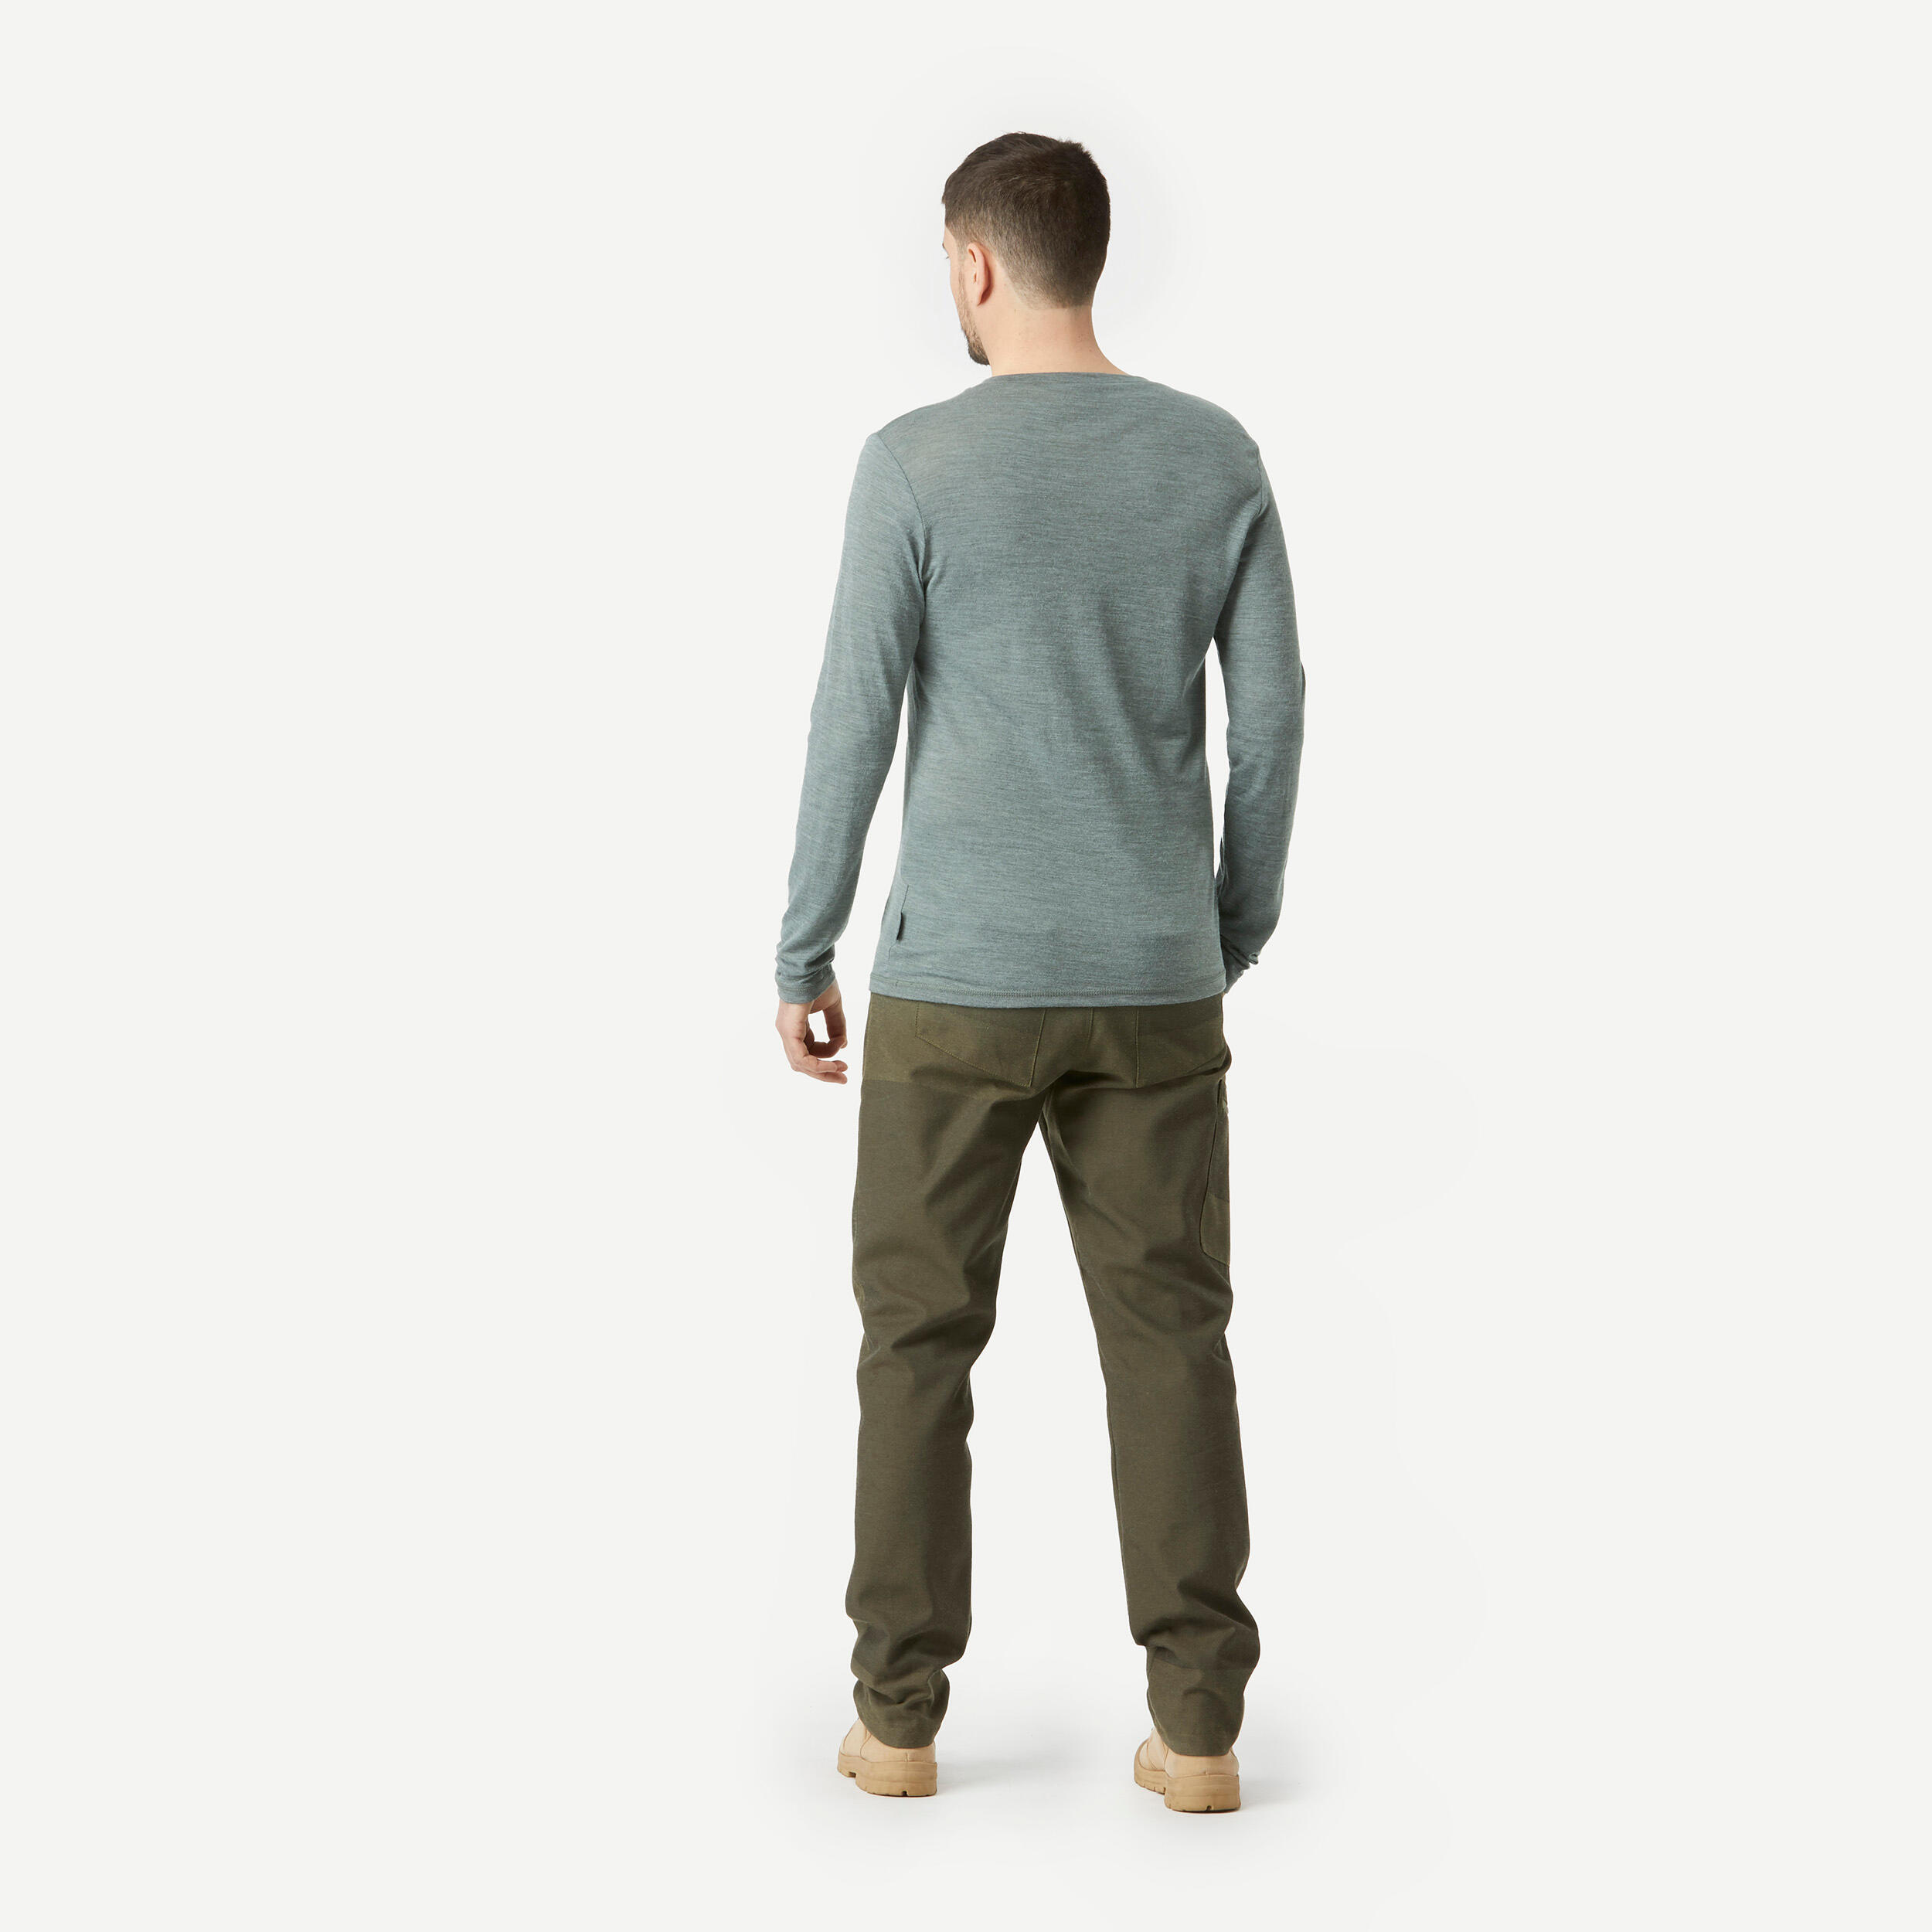 Men's long-sleeved Merino wool trekking t-shirt - TRAVEL 500 - Khaki 4/6